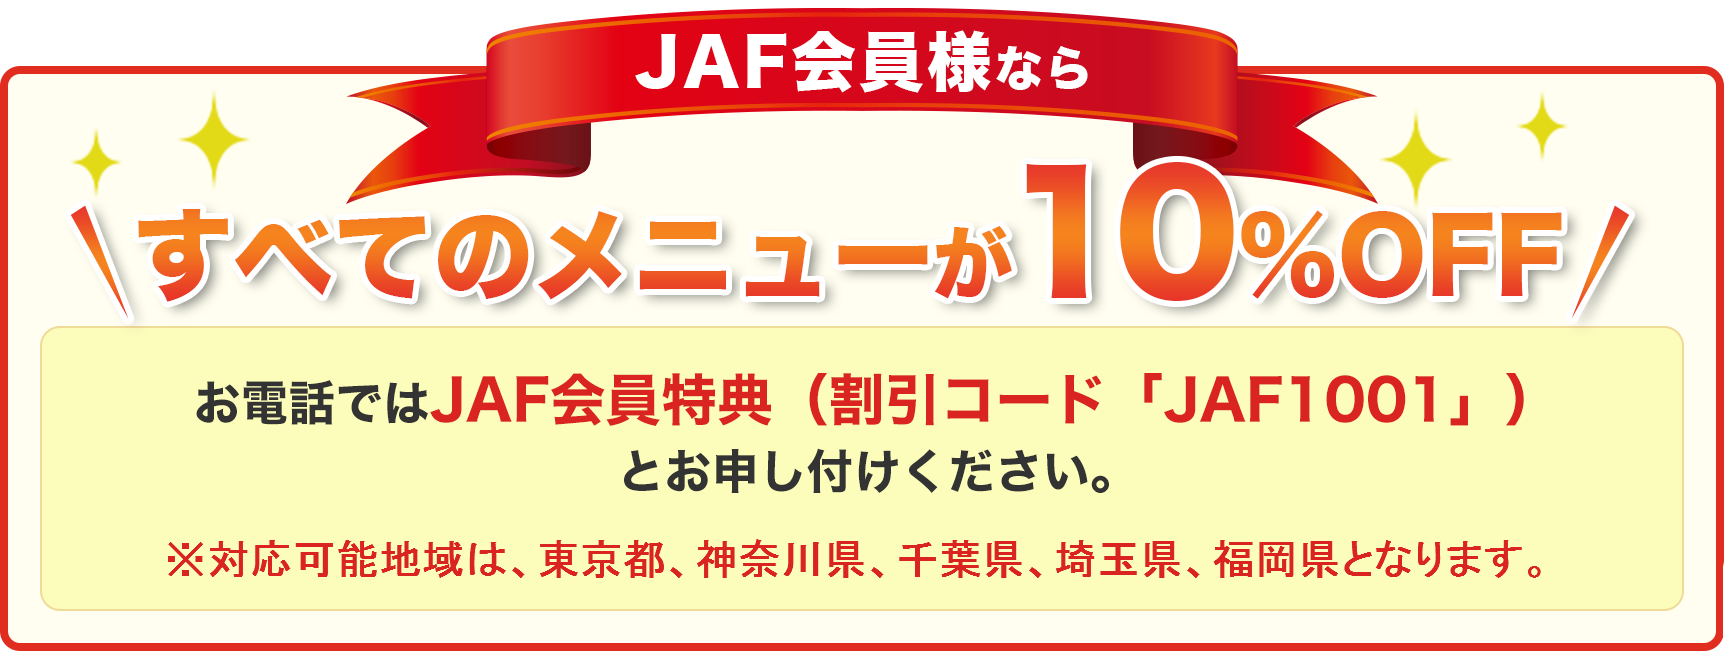 JAF会員様ならすべてのメニューが10%OFFお電話では「JAF会員特典（割引コード「JAF1001」）」とお申し付けください。